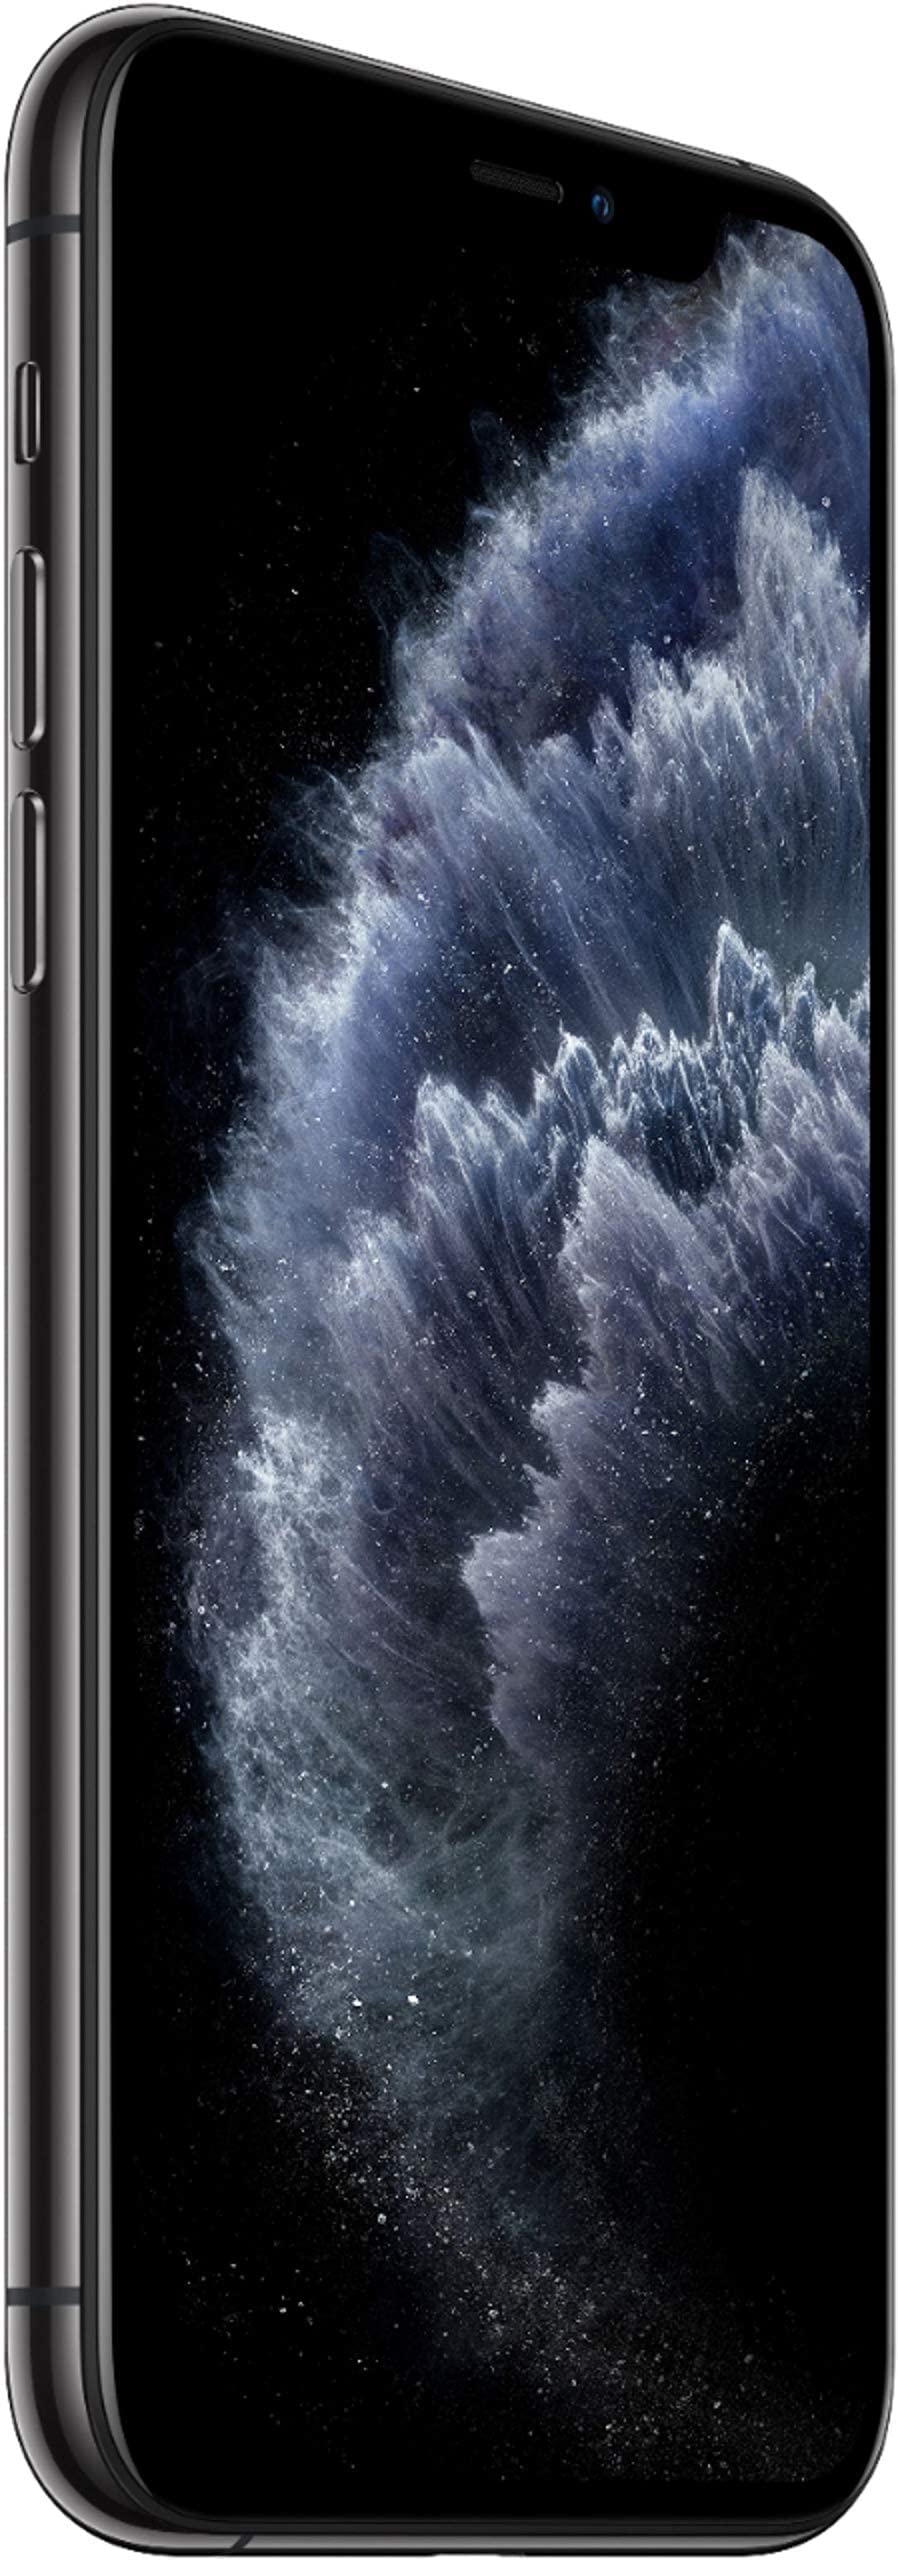 Apple iPhone 11 Pro Max, 512GB, Space Gray - Unlocked (Renewed Premium)